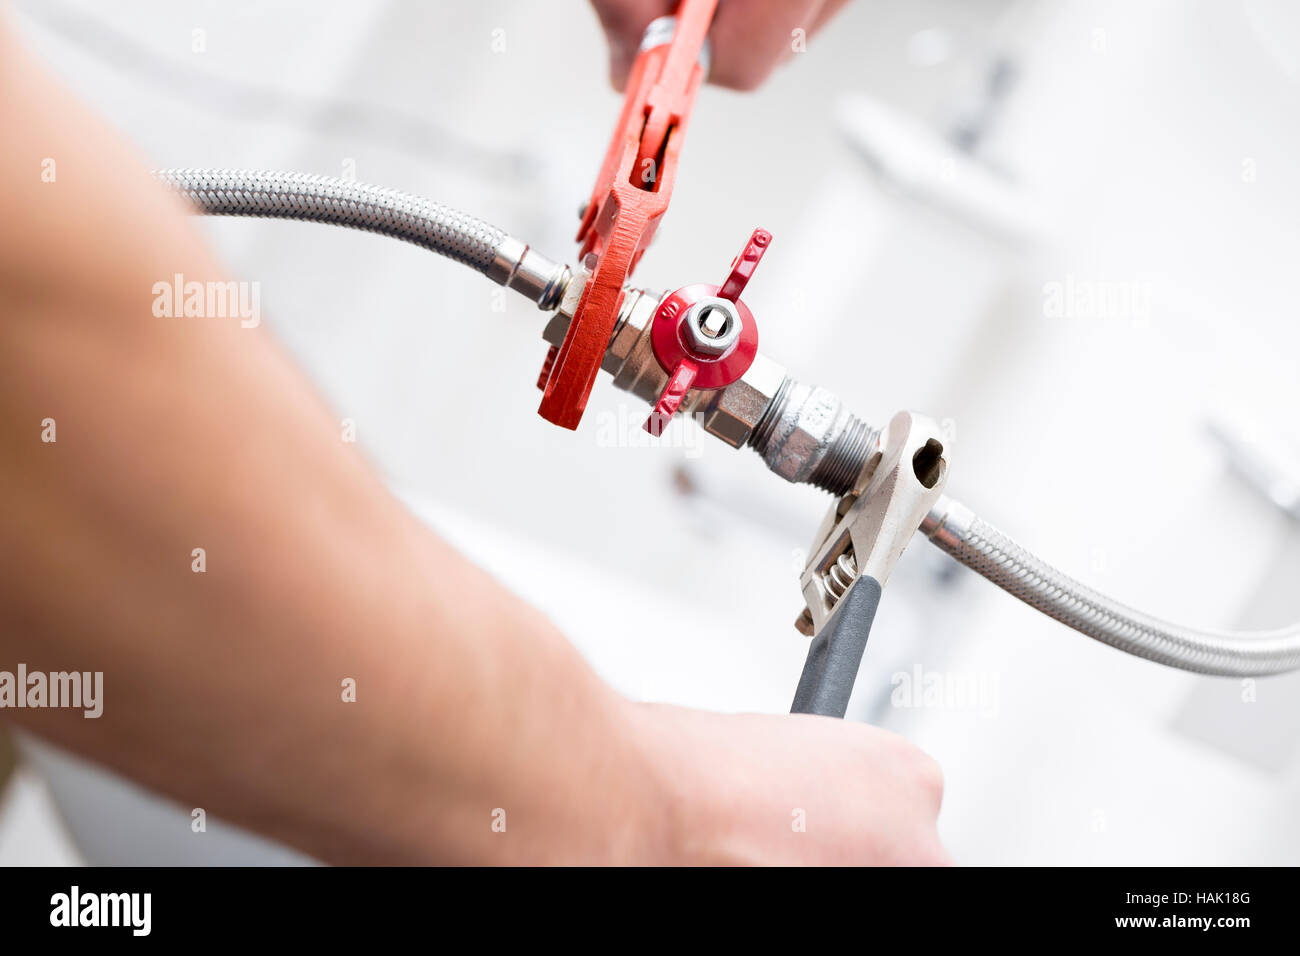 plumber screwing plumbing fittings in bathroom Stock Photo